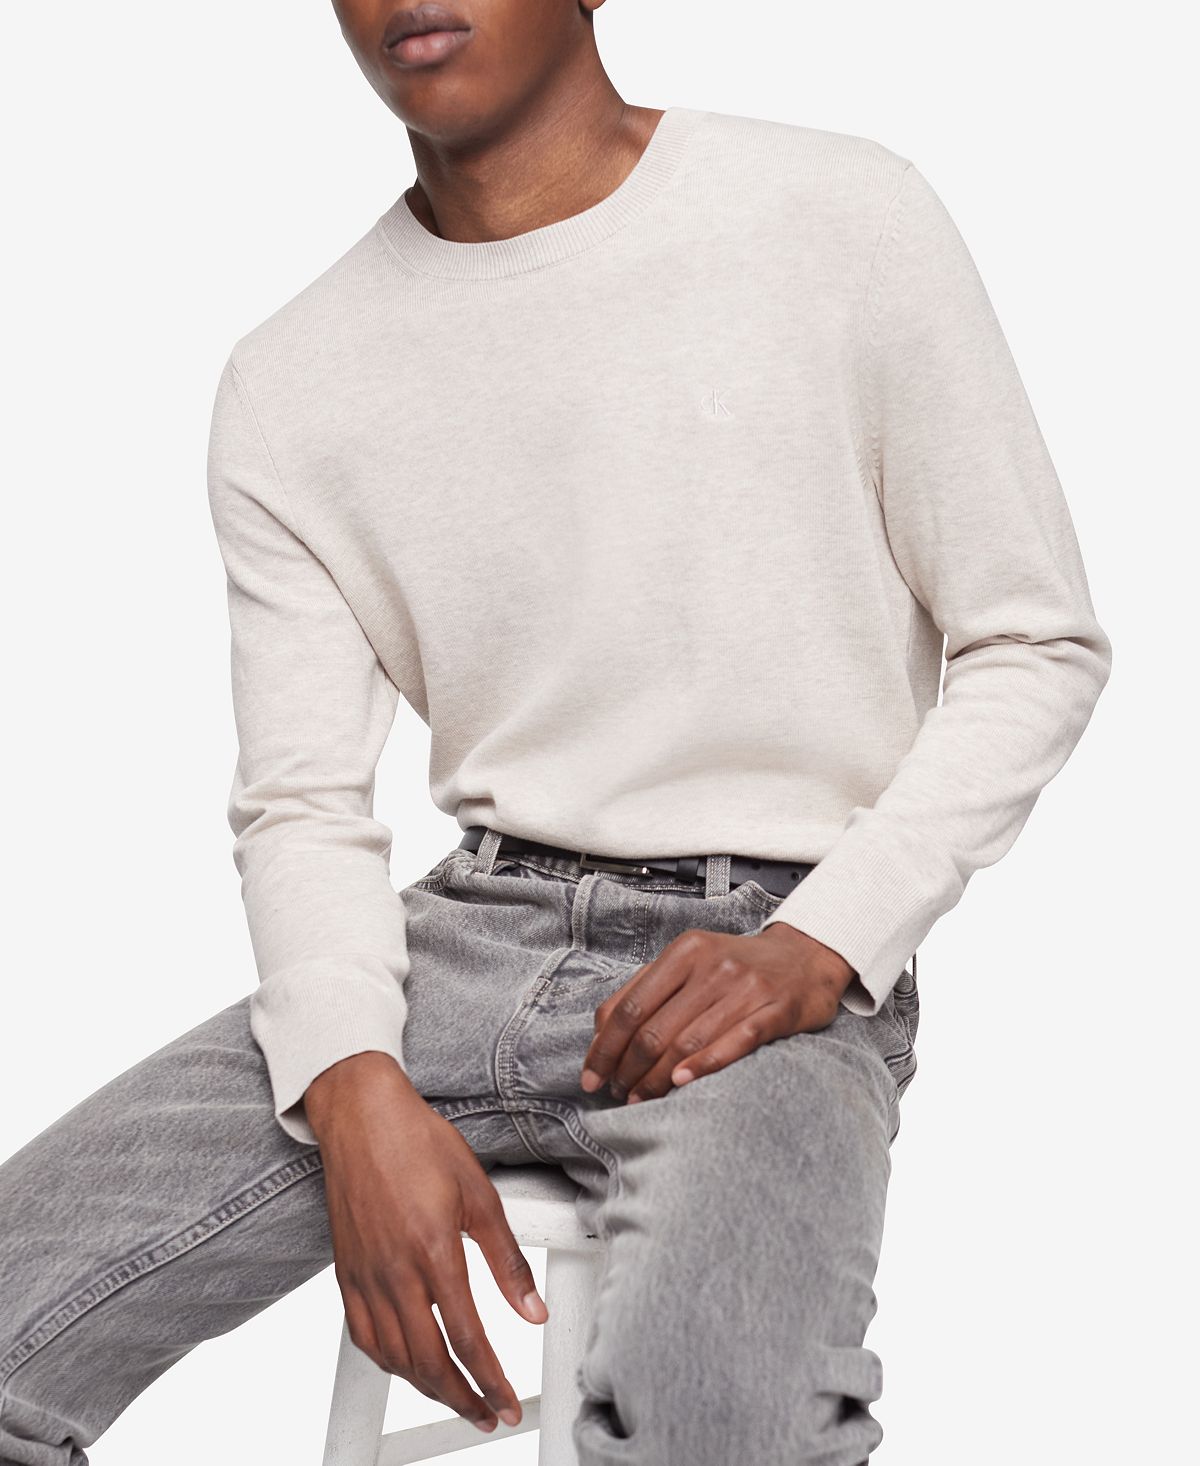 Calvin Klein Slim-straight Fit Stretch Jeans Palmer Grey